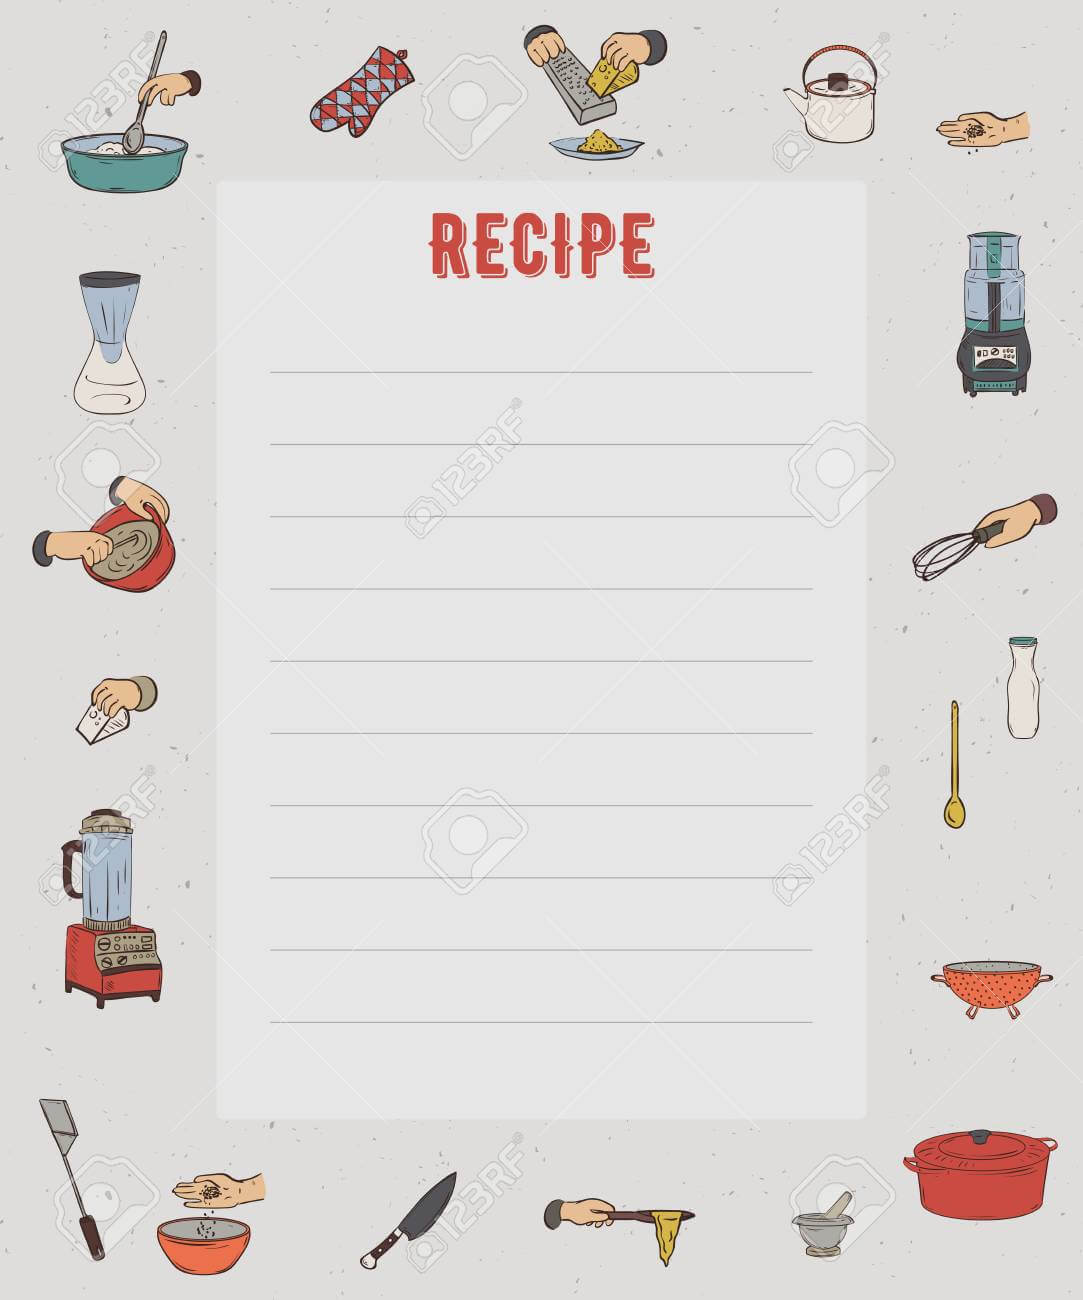 Recipe Card. Cookbook Page. Design Template With Kitchen Utensils.. With Recipe Card Design Template